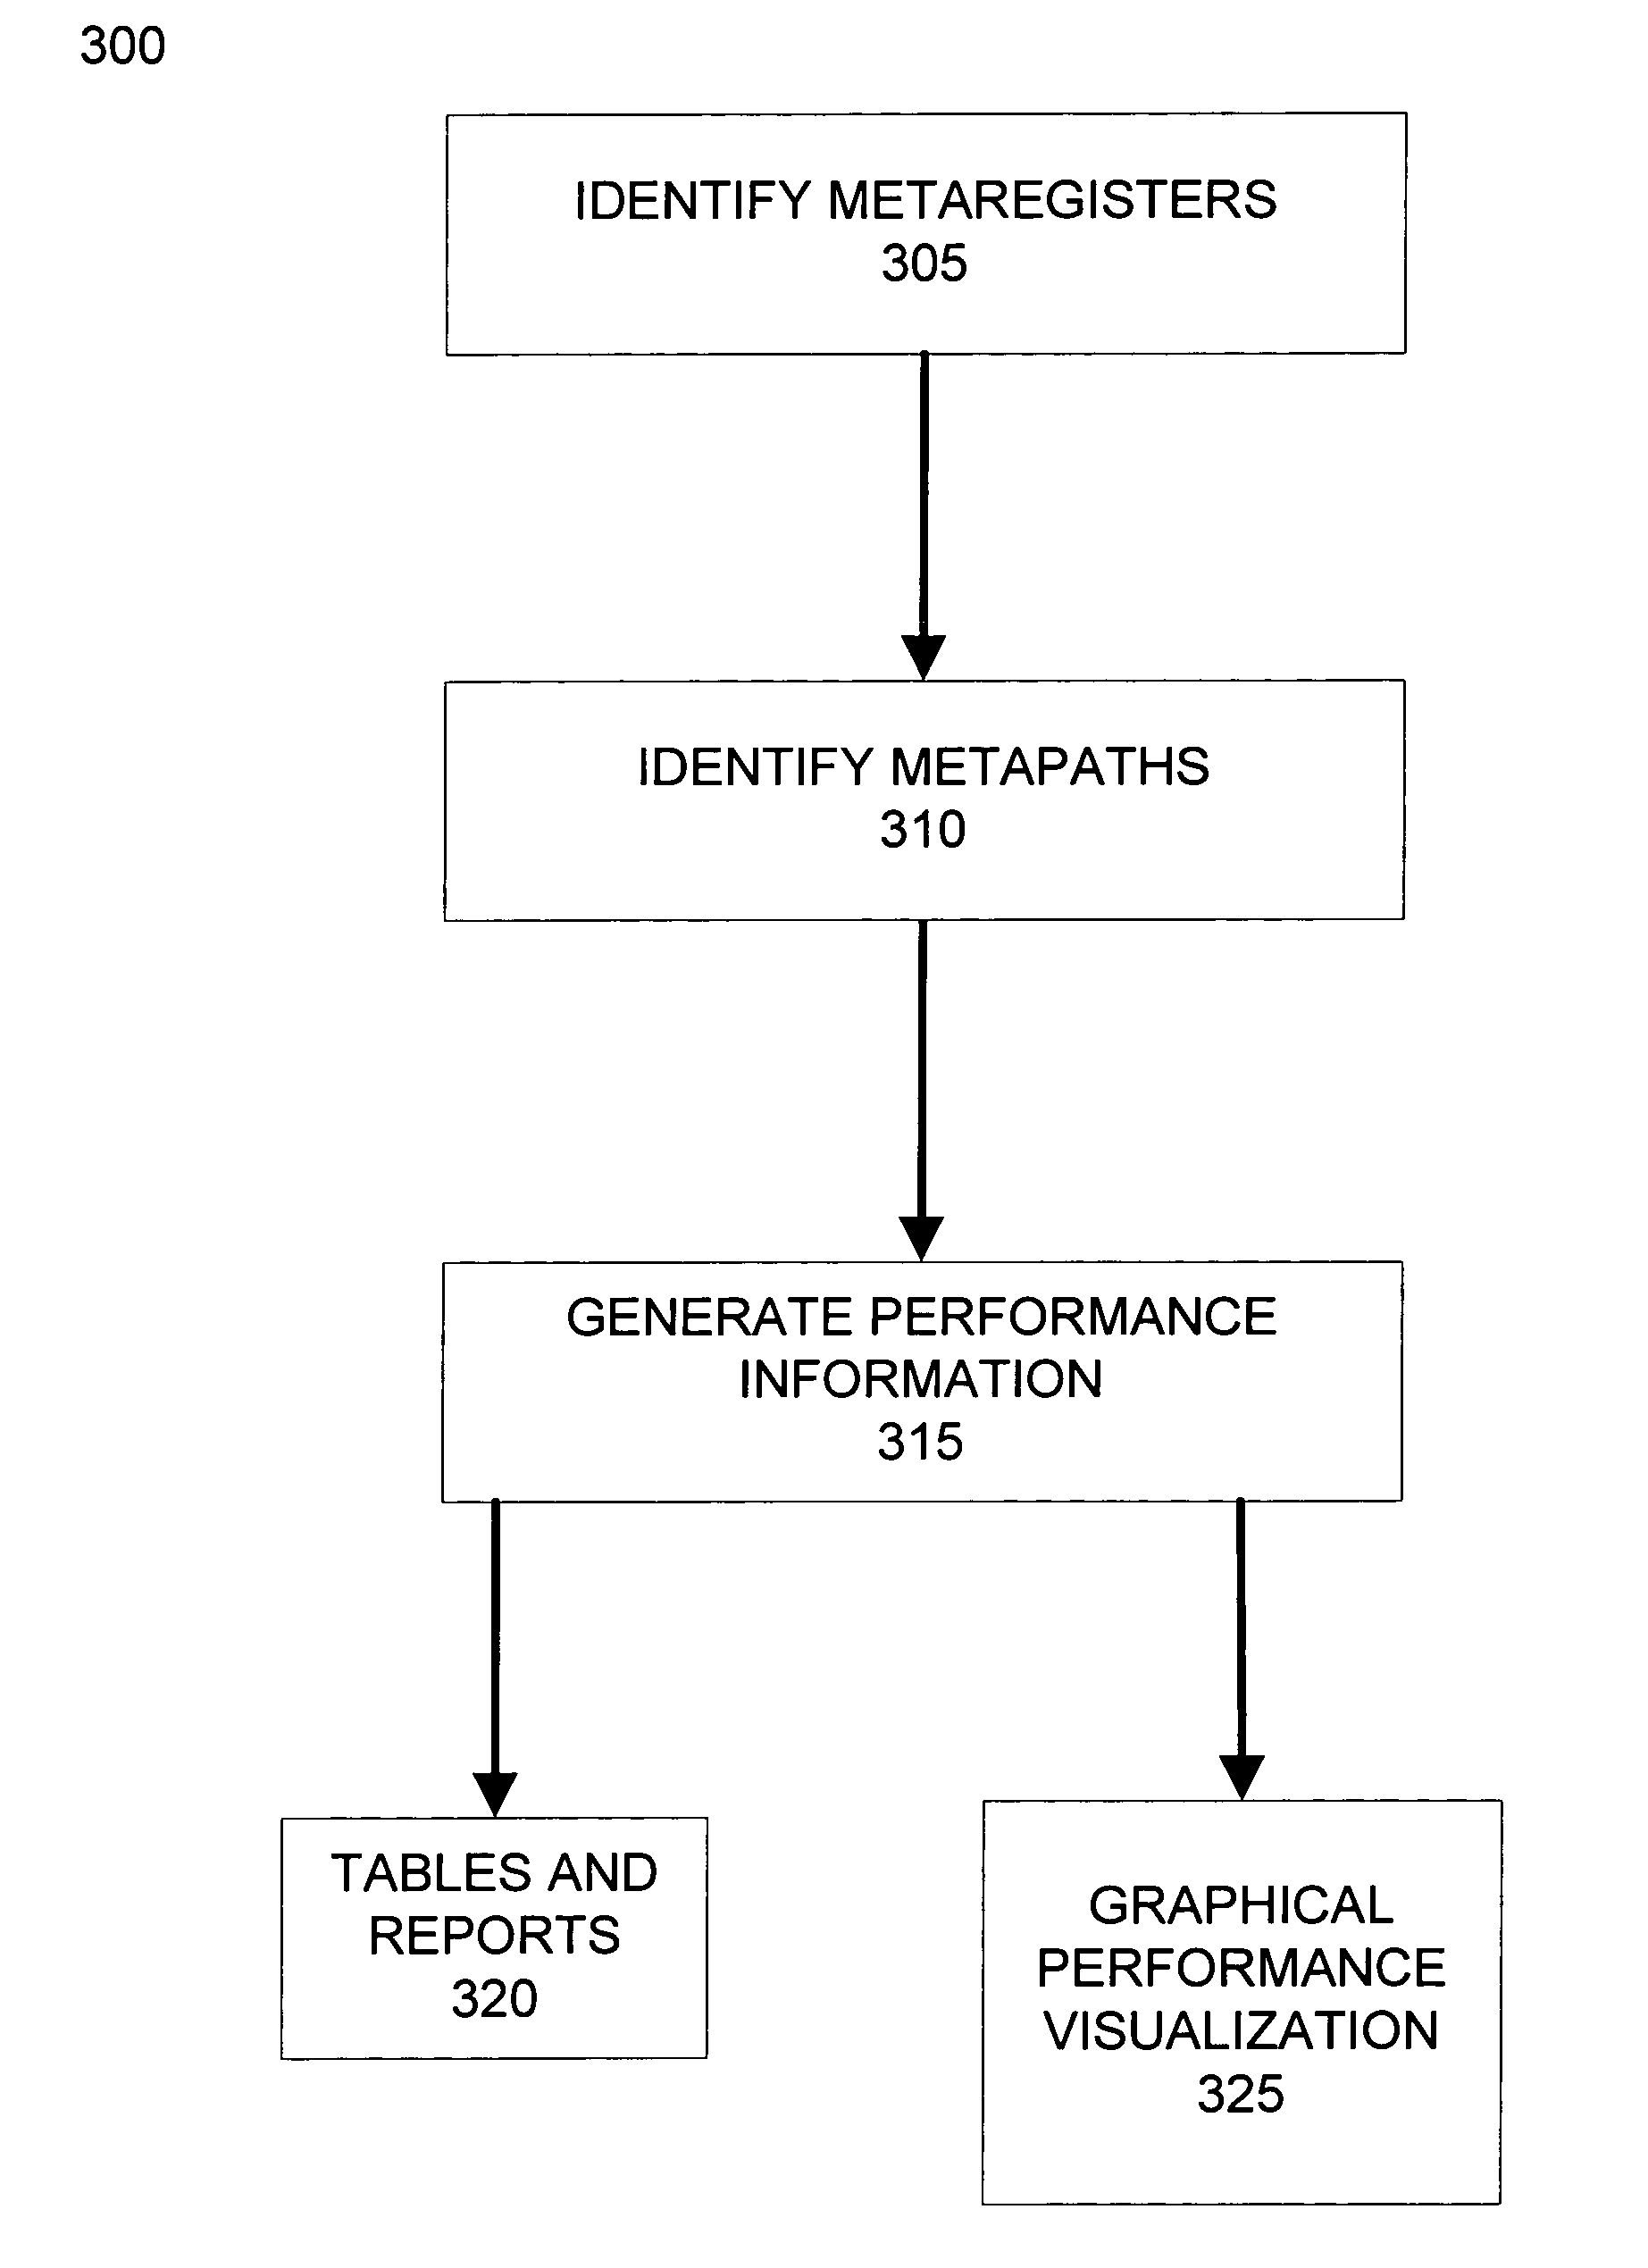 Performance visualization system